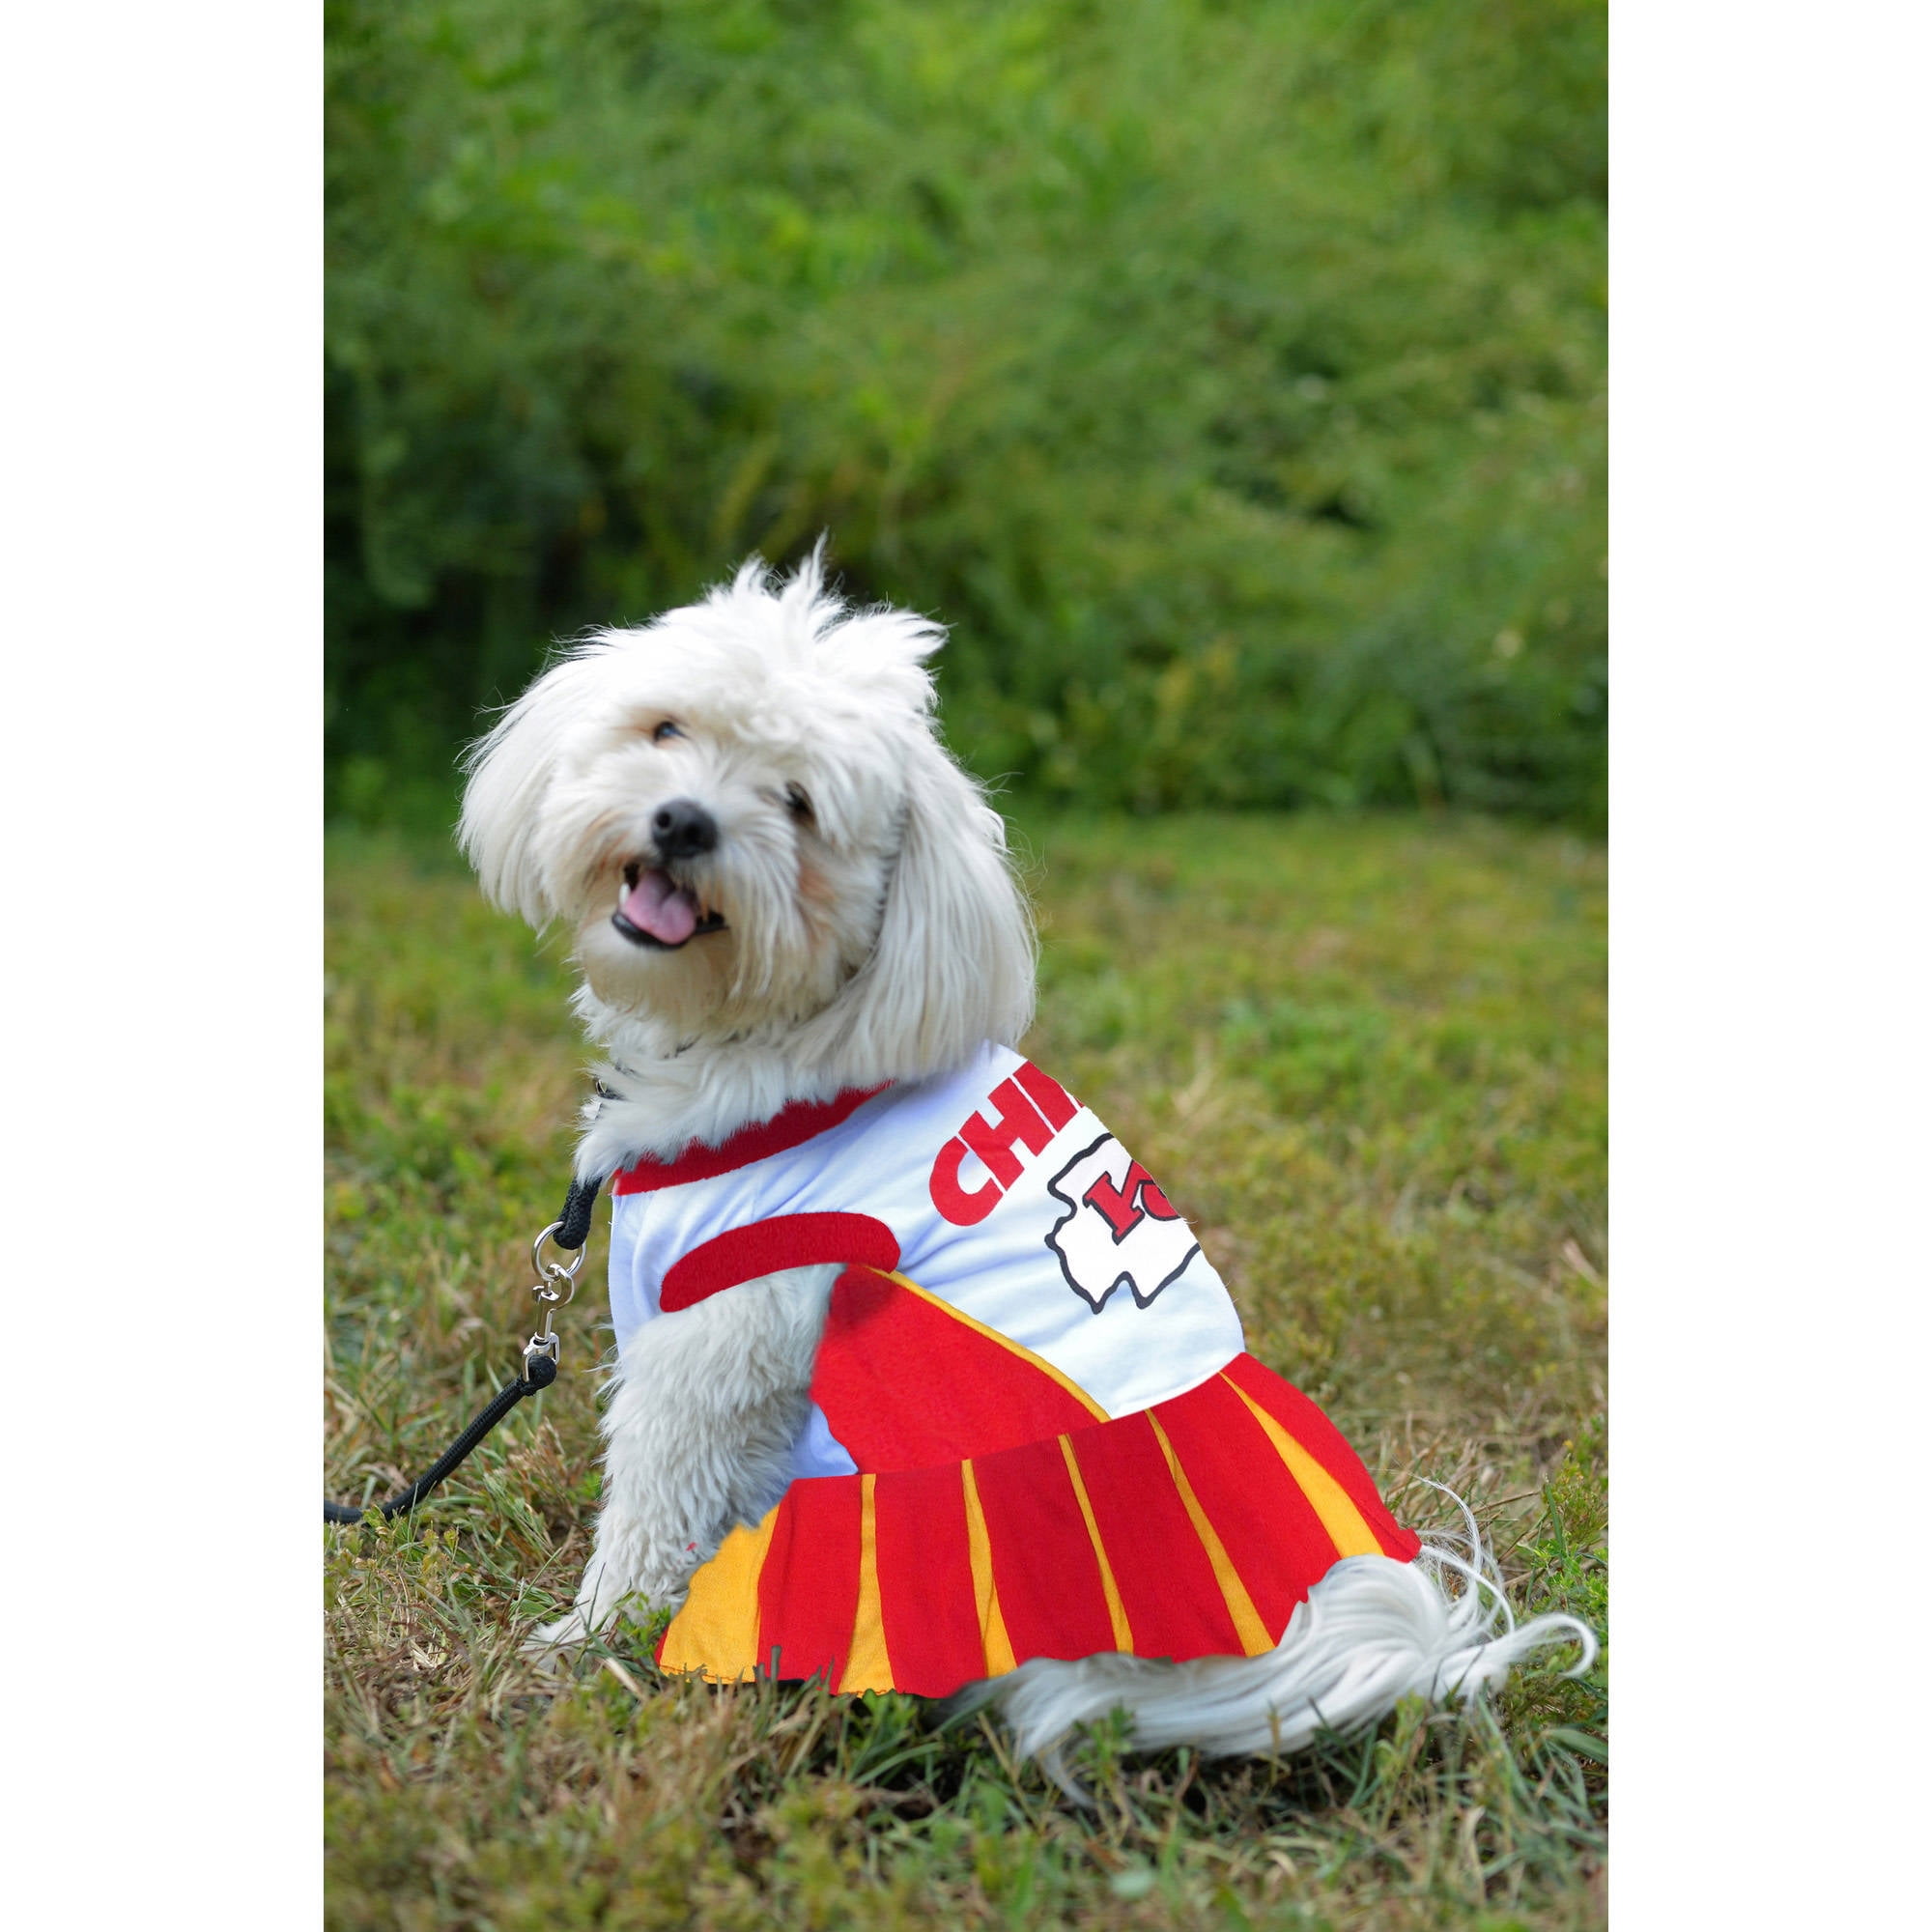 kansas city chiefs dog costume